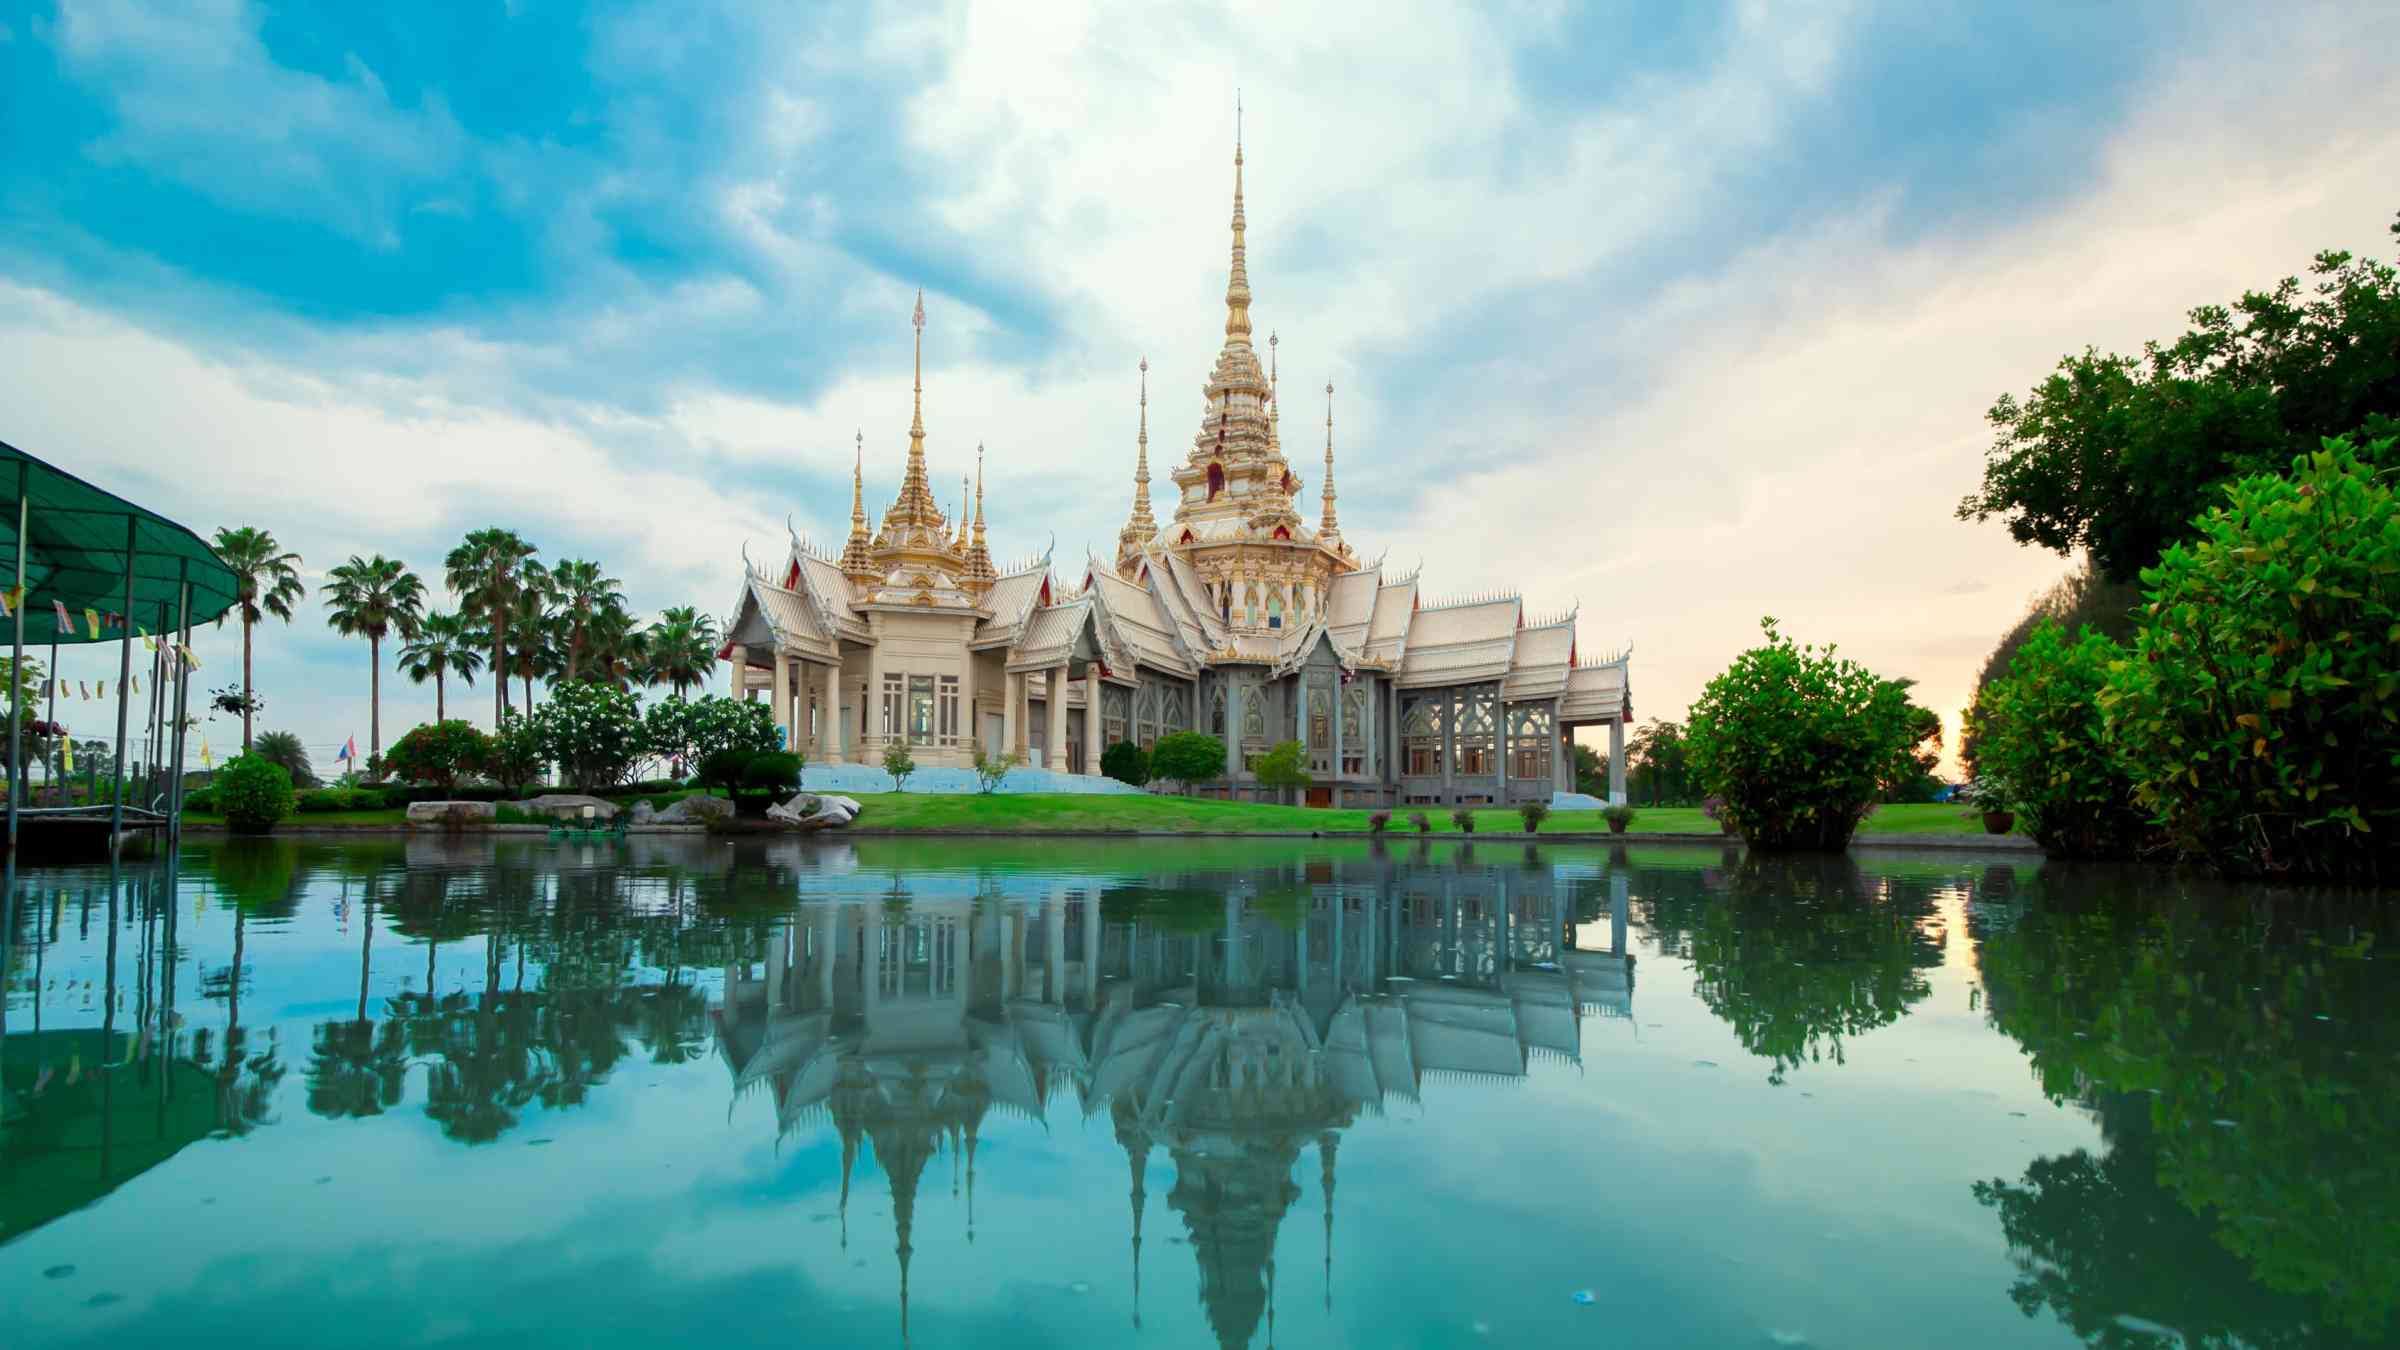 Image of Thailand